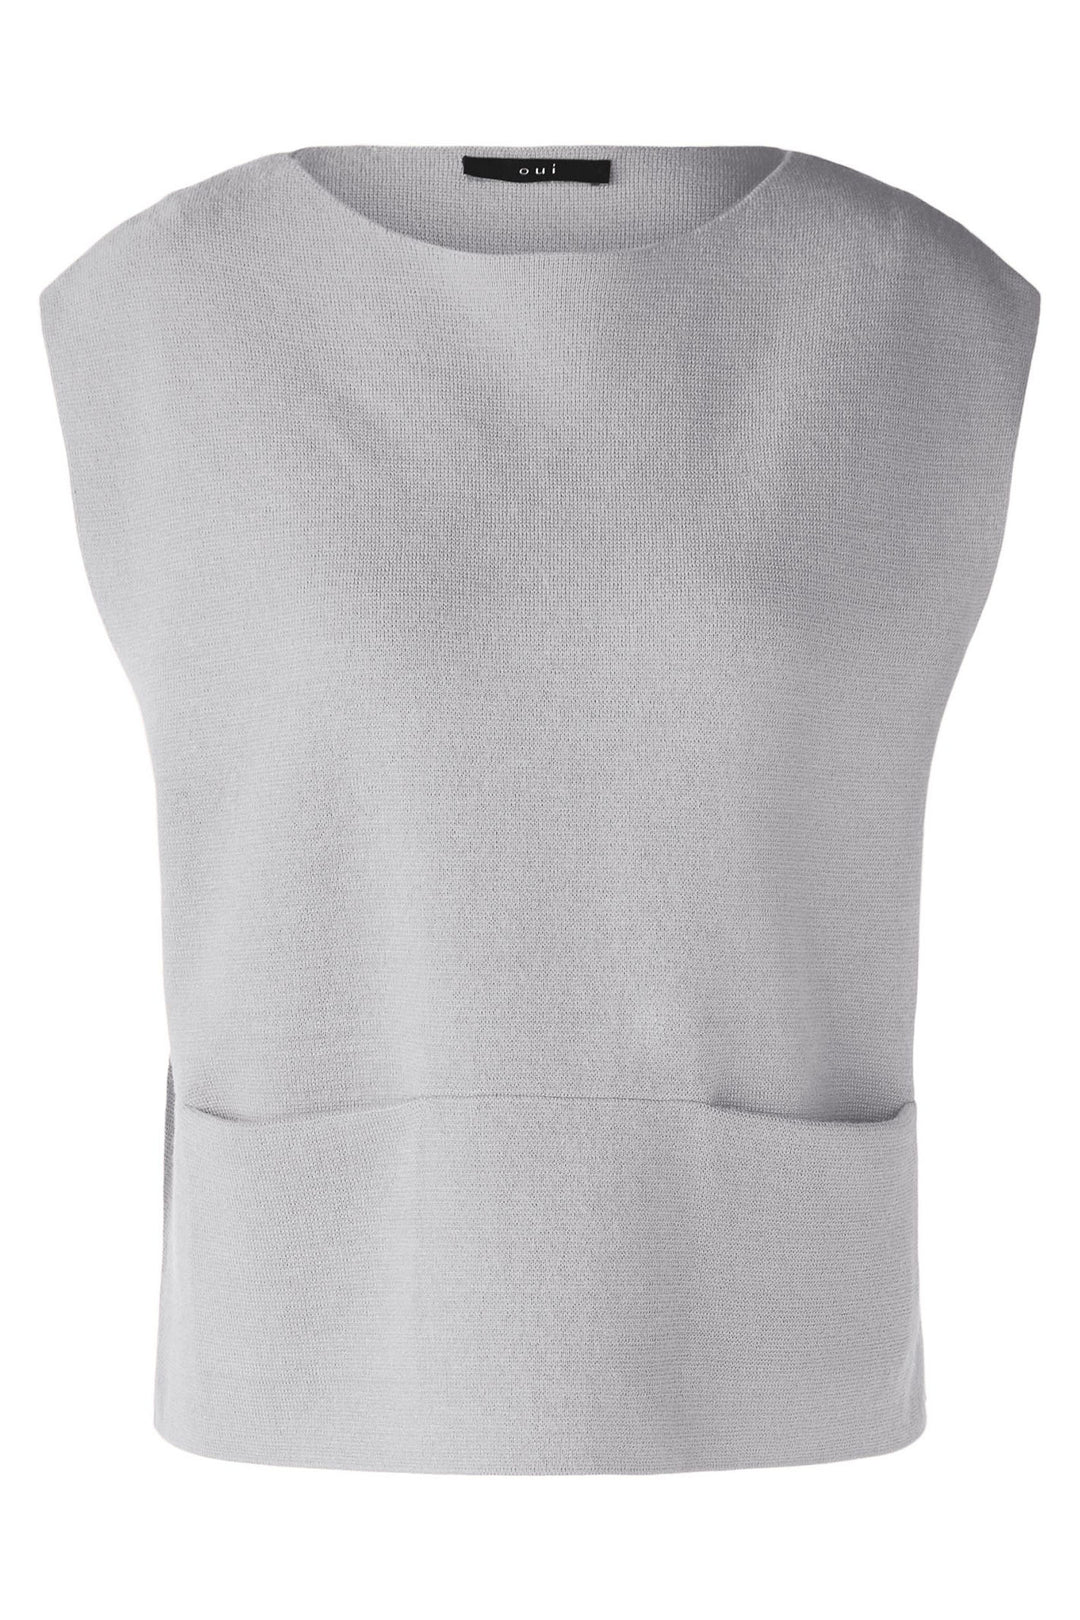 Oui 85978 Light Grey Sleeveless Knit Jumper With Pockets - Olivia Grace Fashion